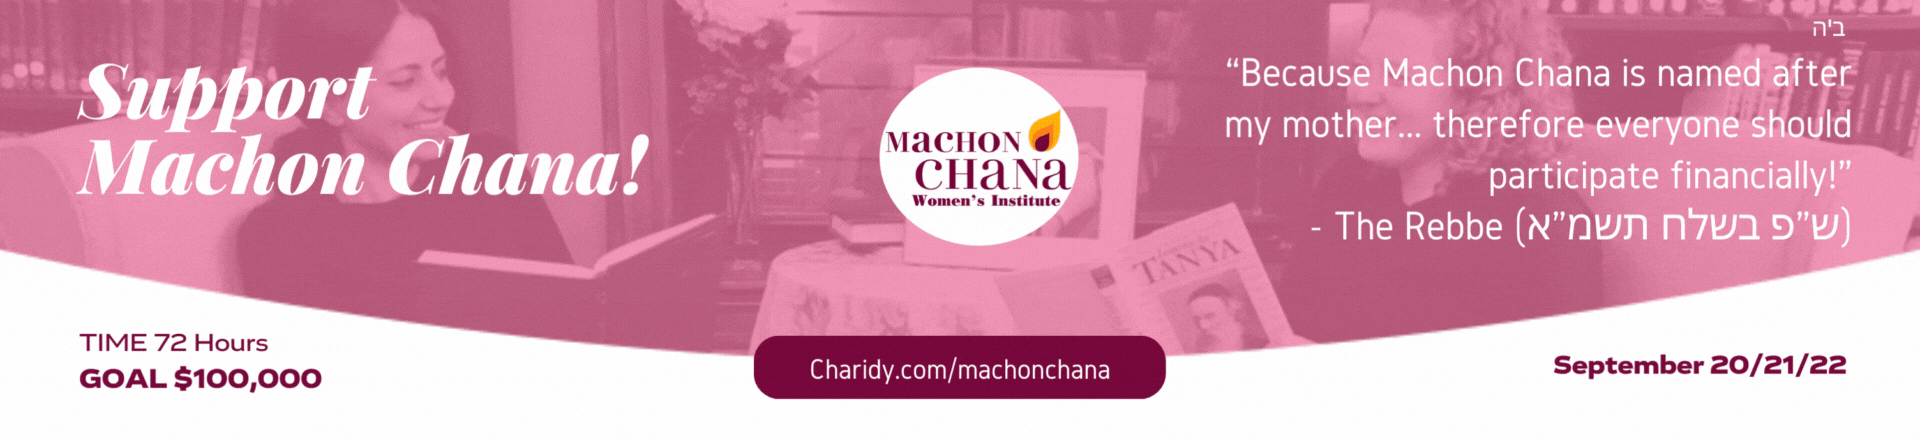 Machon Chana – Top banner